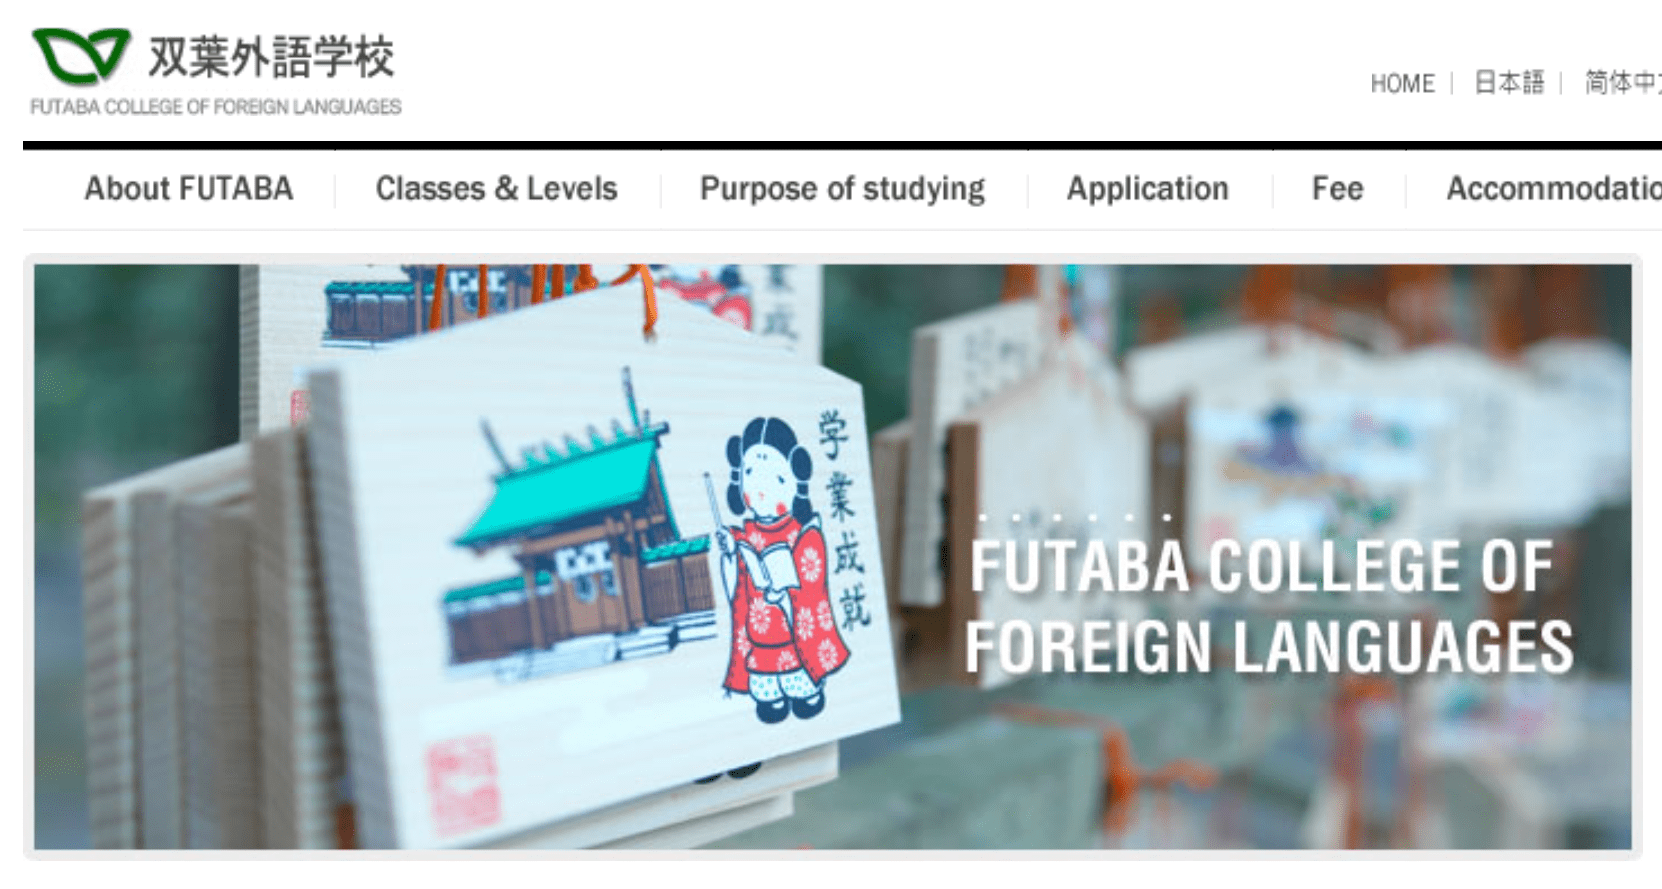 Futaba College of Foreign Languages website